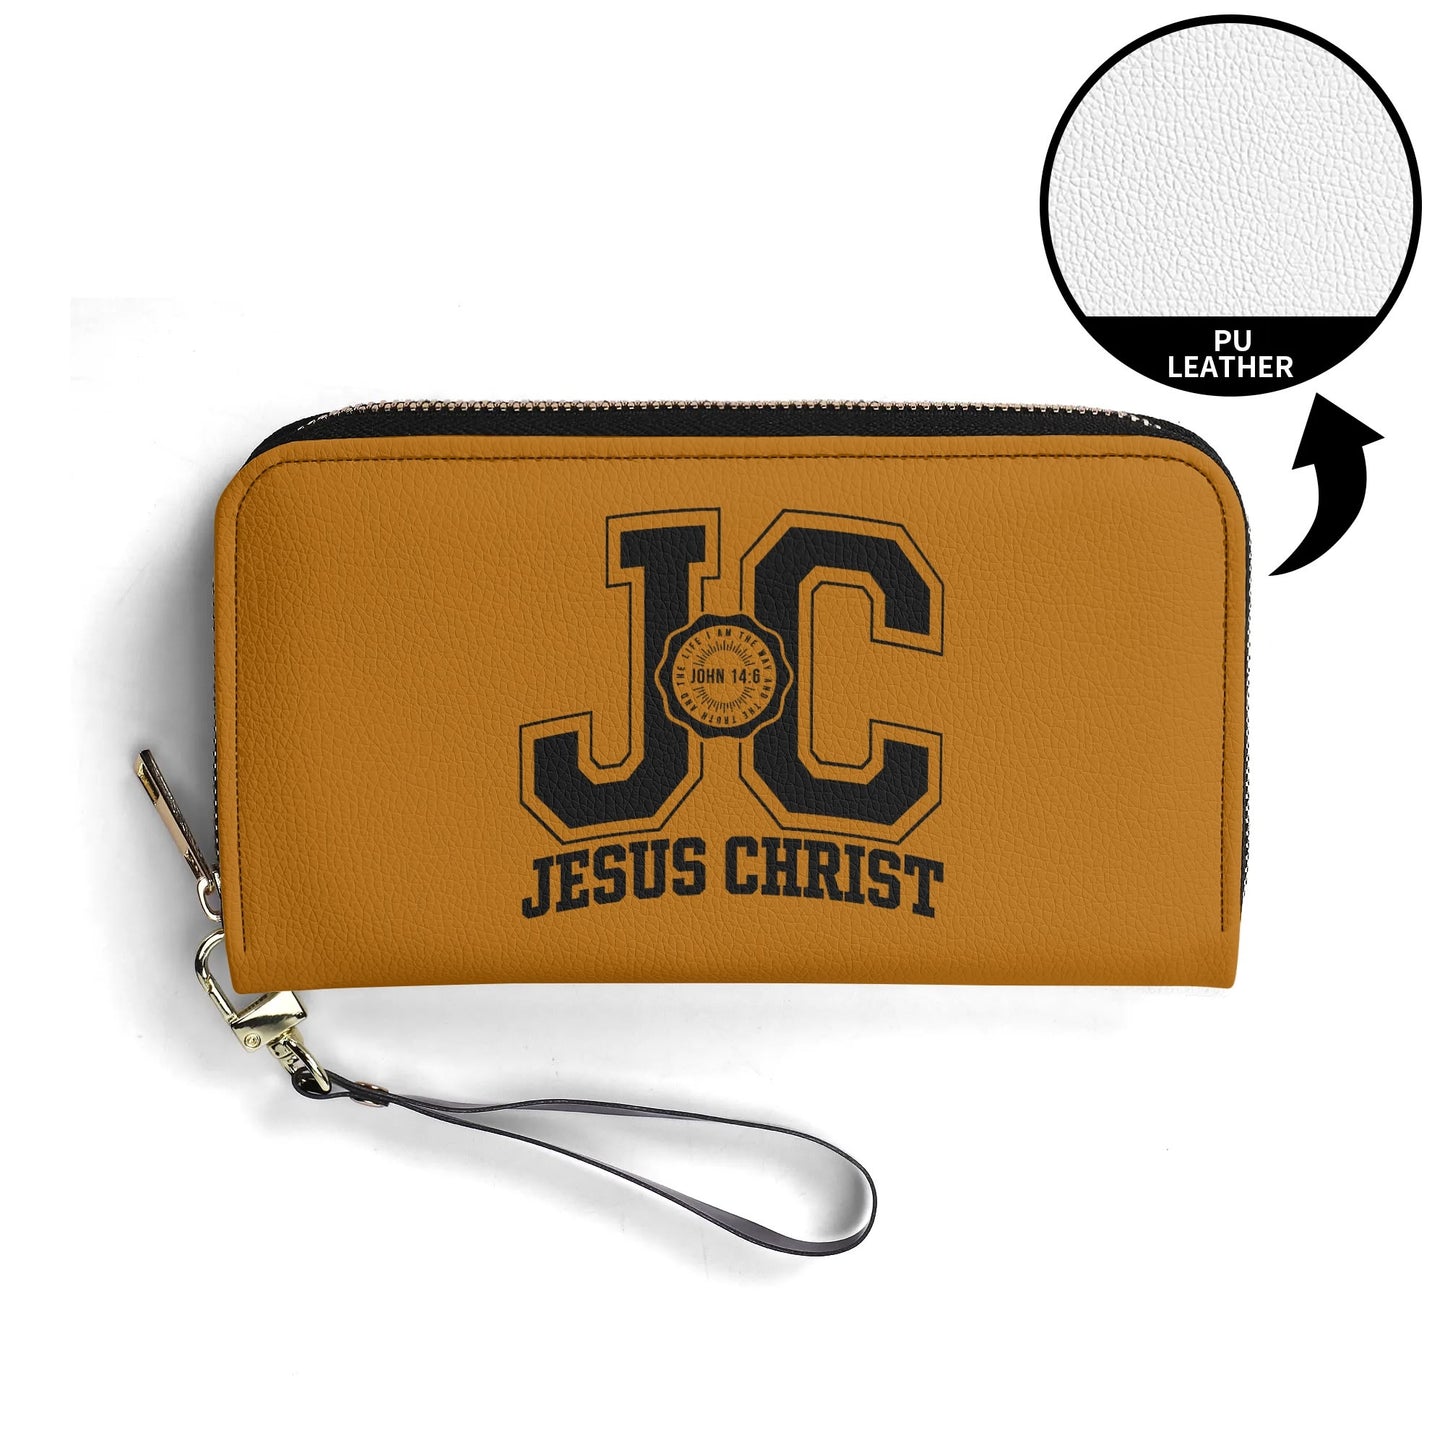 JC Jesus Christ PU Leather Womens Christian Wallet